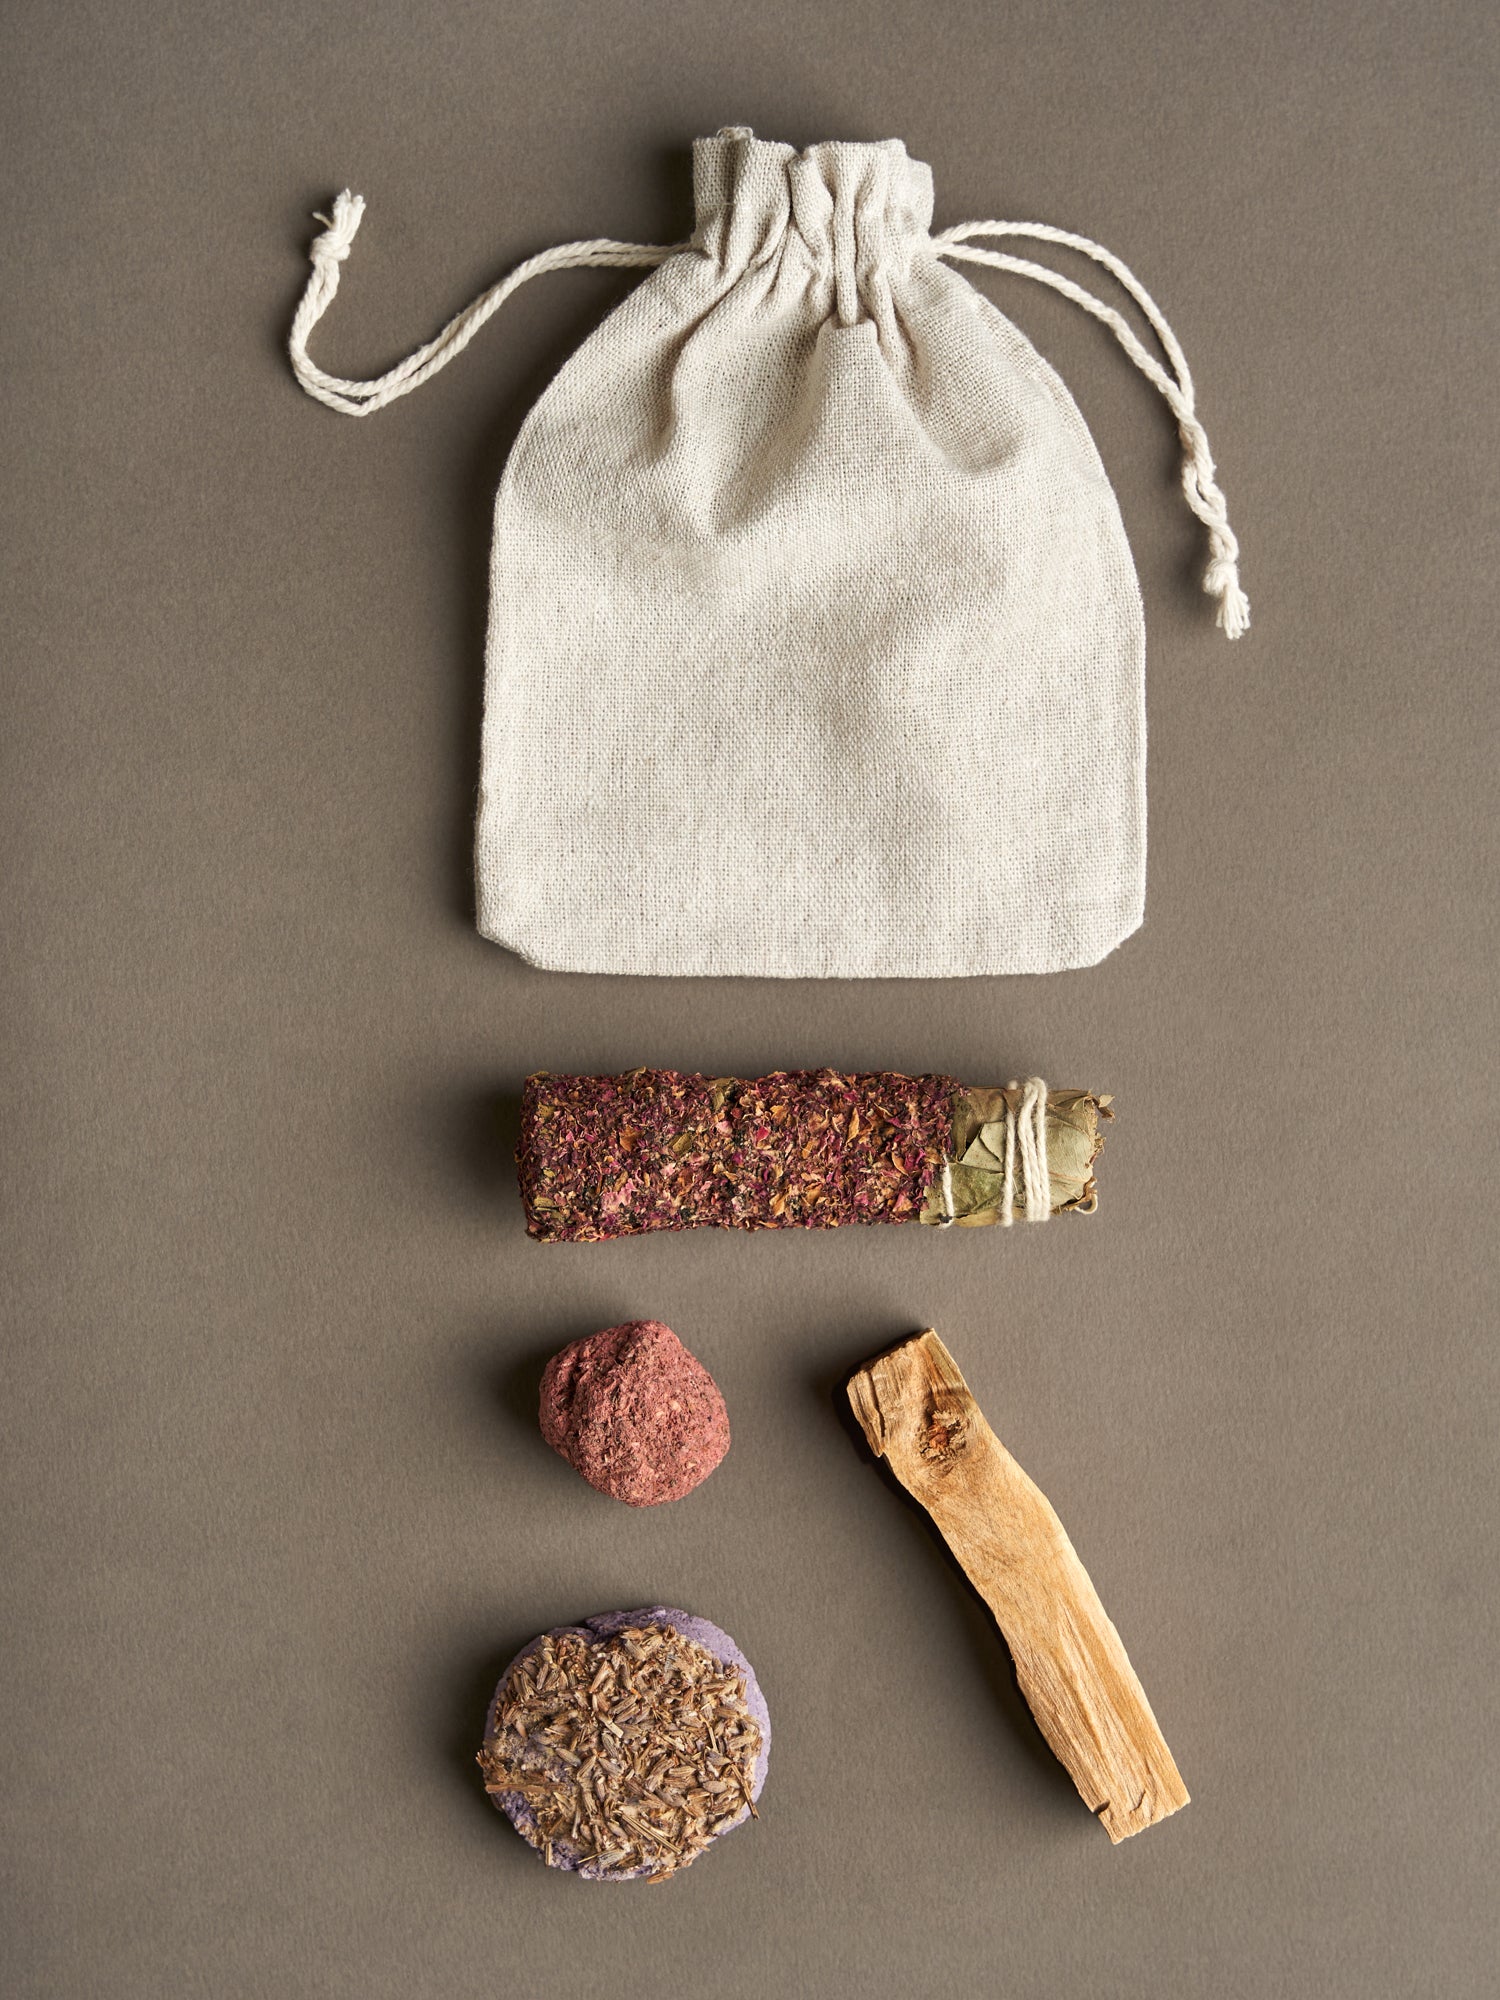 Calming ritual kit - Pastill, bombita, palo santo, smudge stick